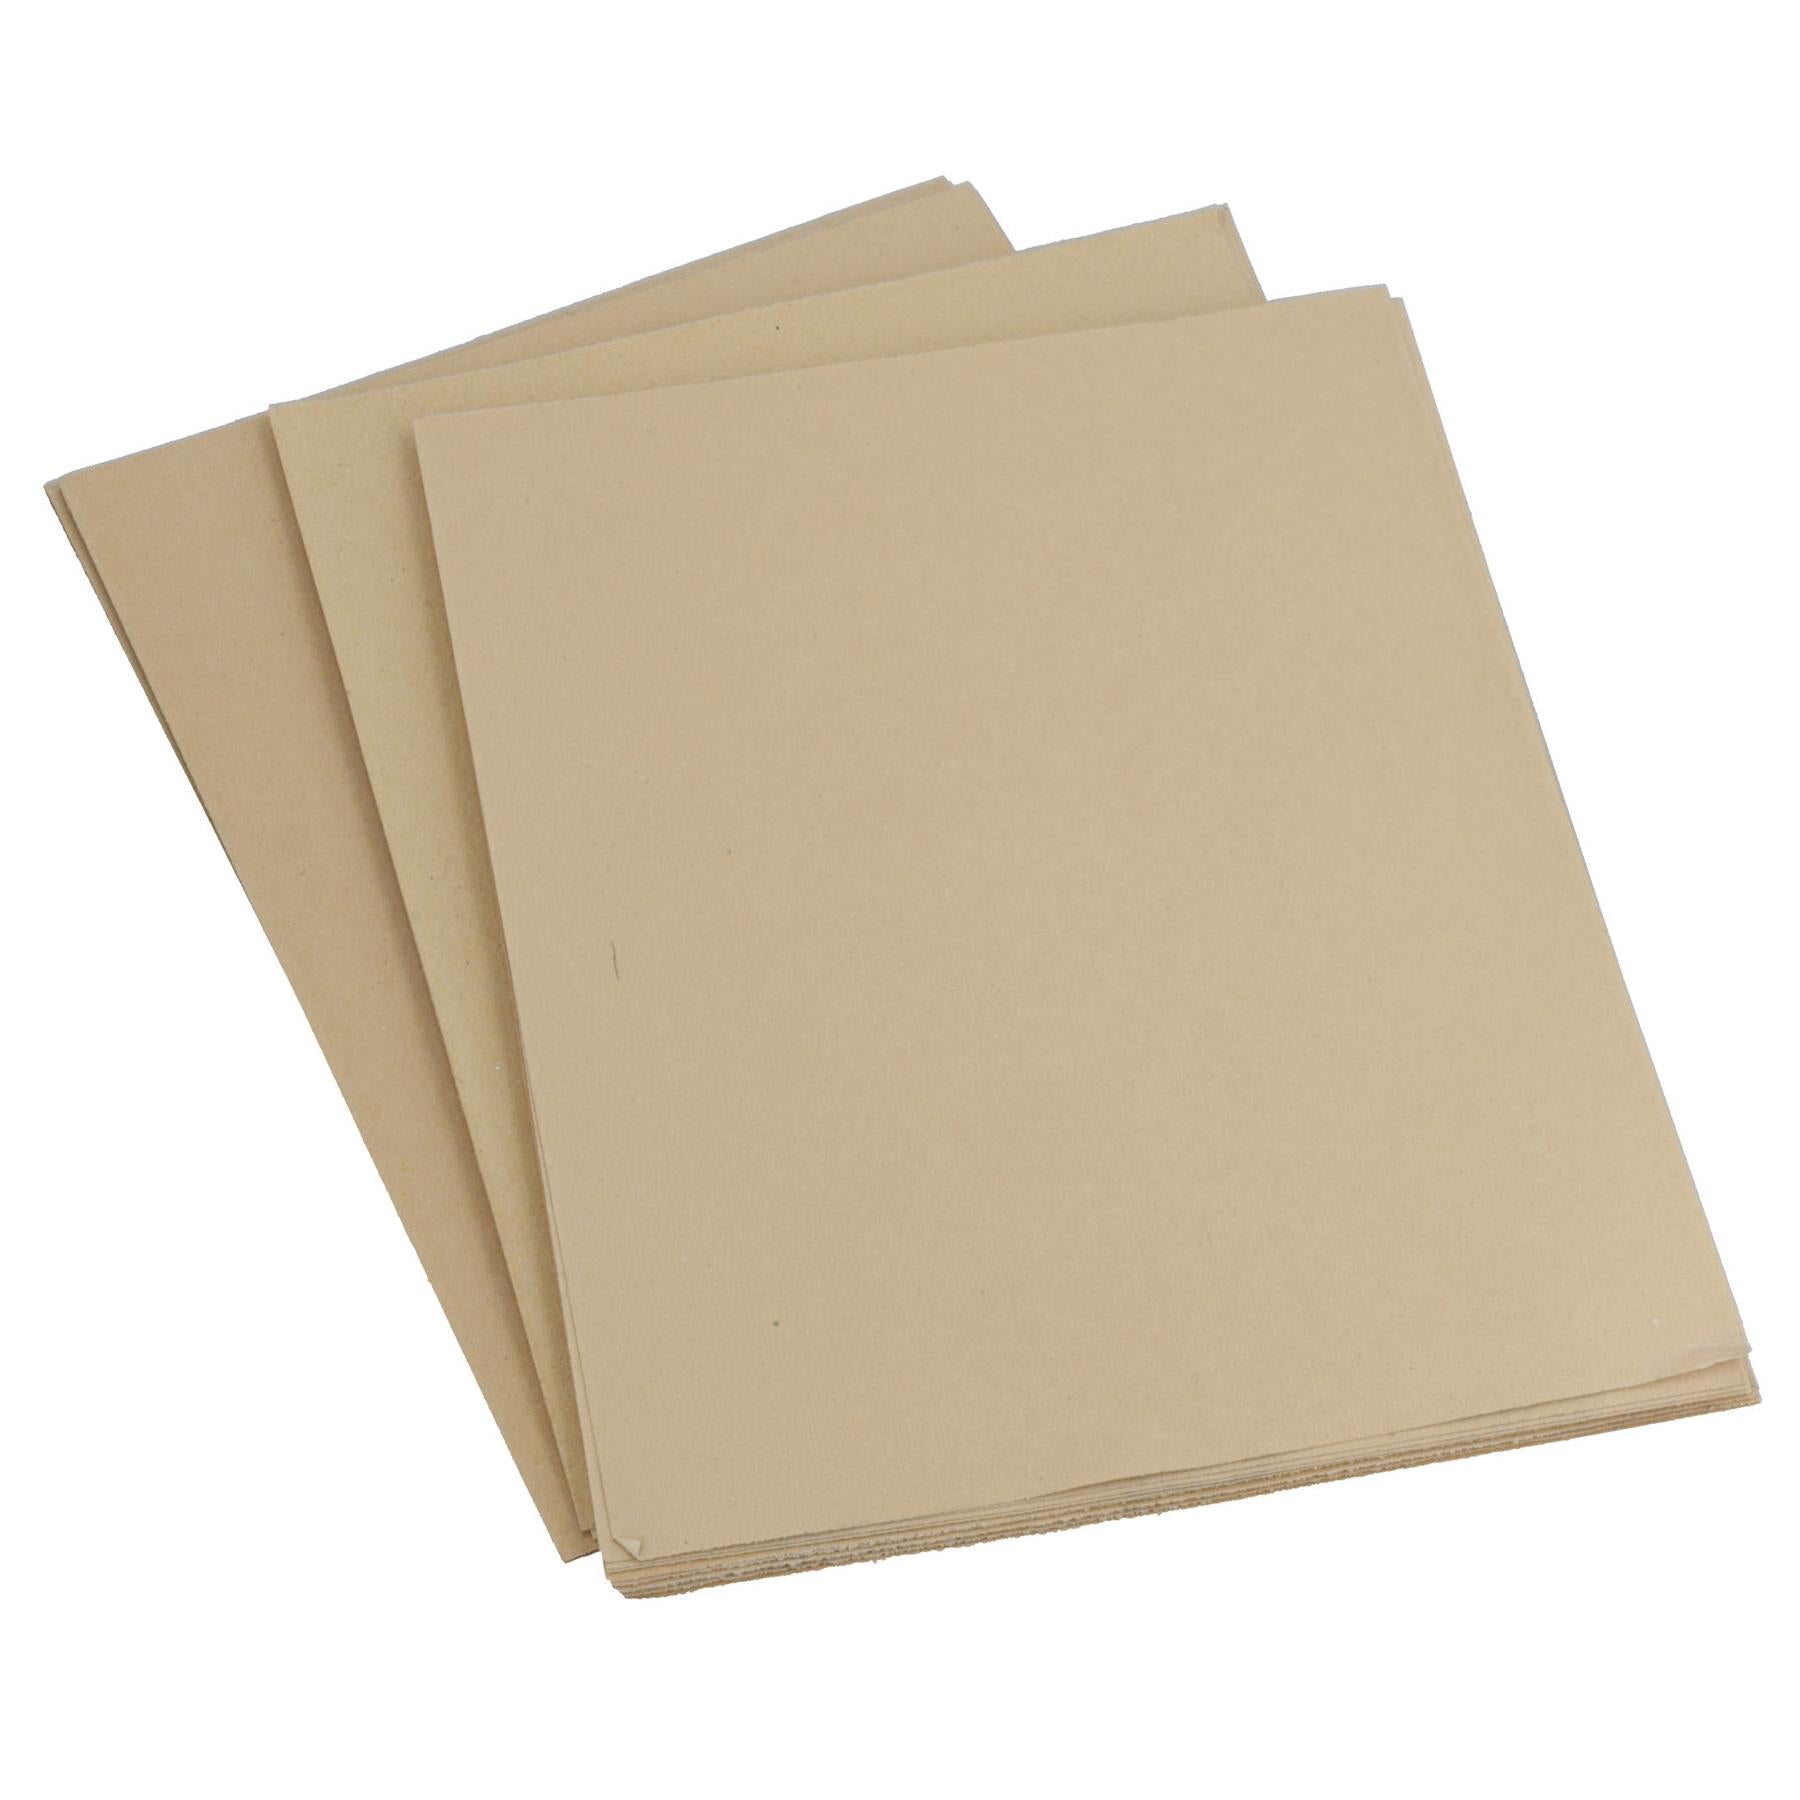 Mixed Grit Sandpaper Sanding Sheets For Metal Wood Plastic 60 - 240 Grit